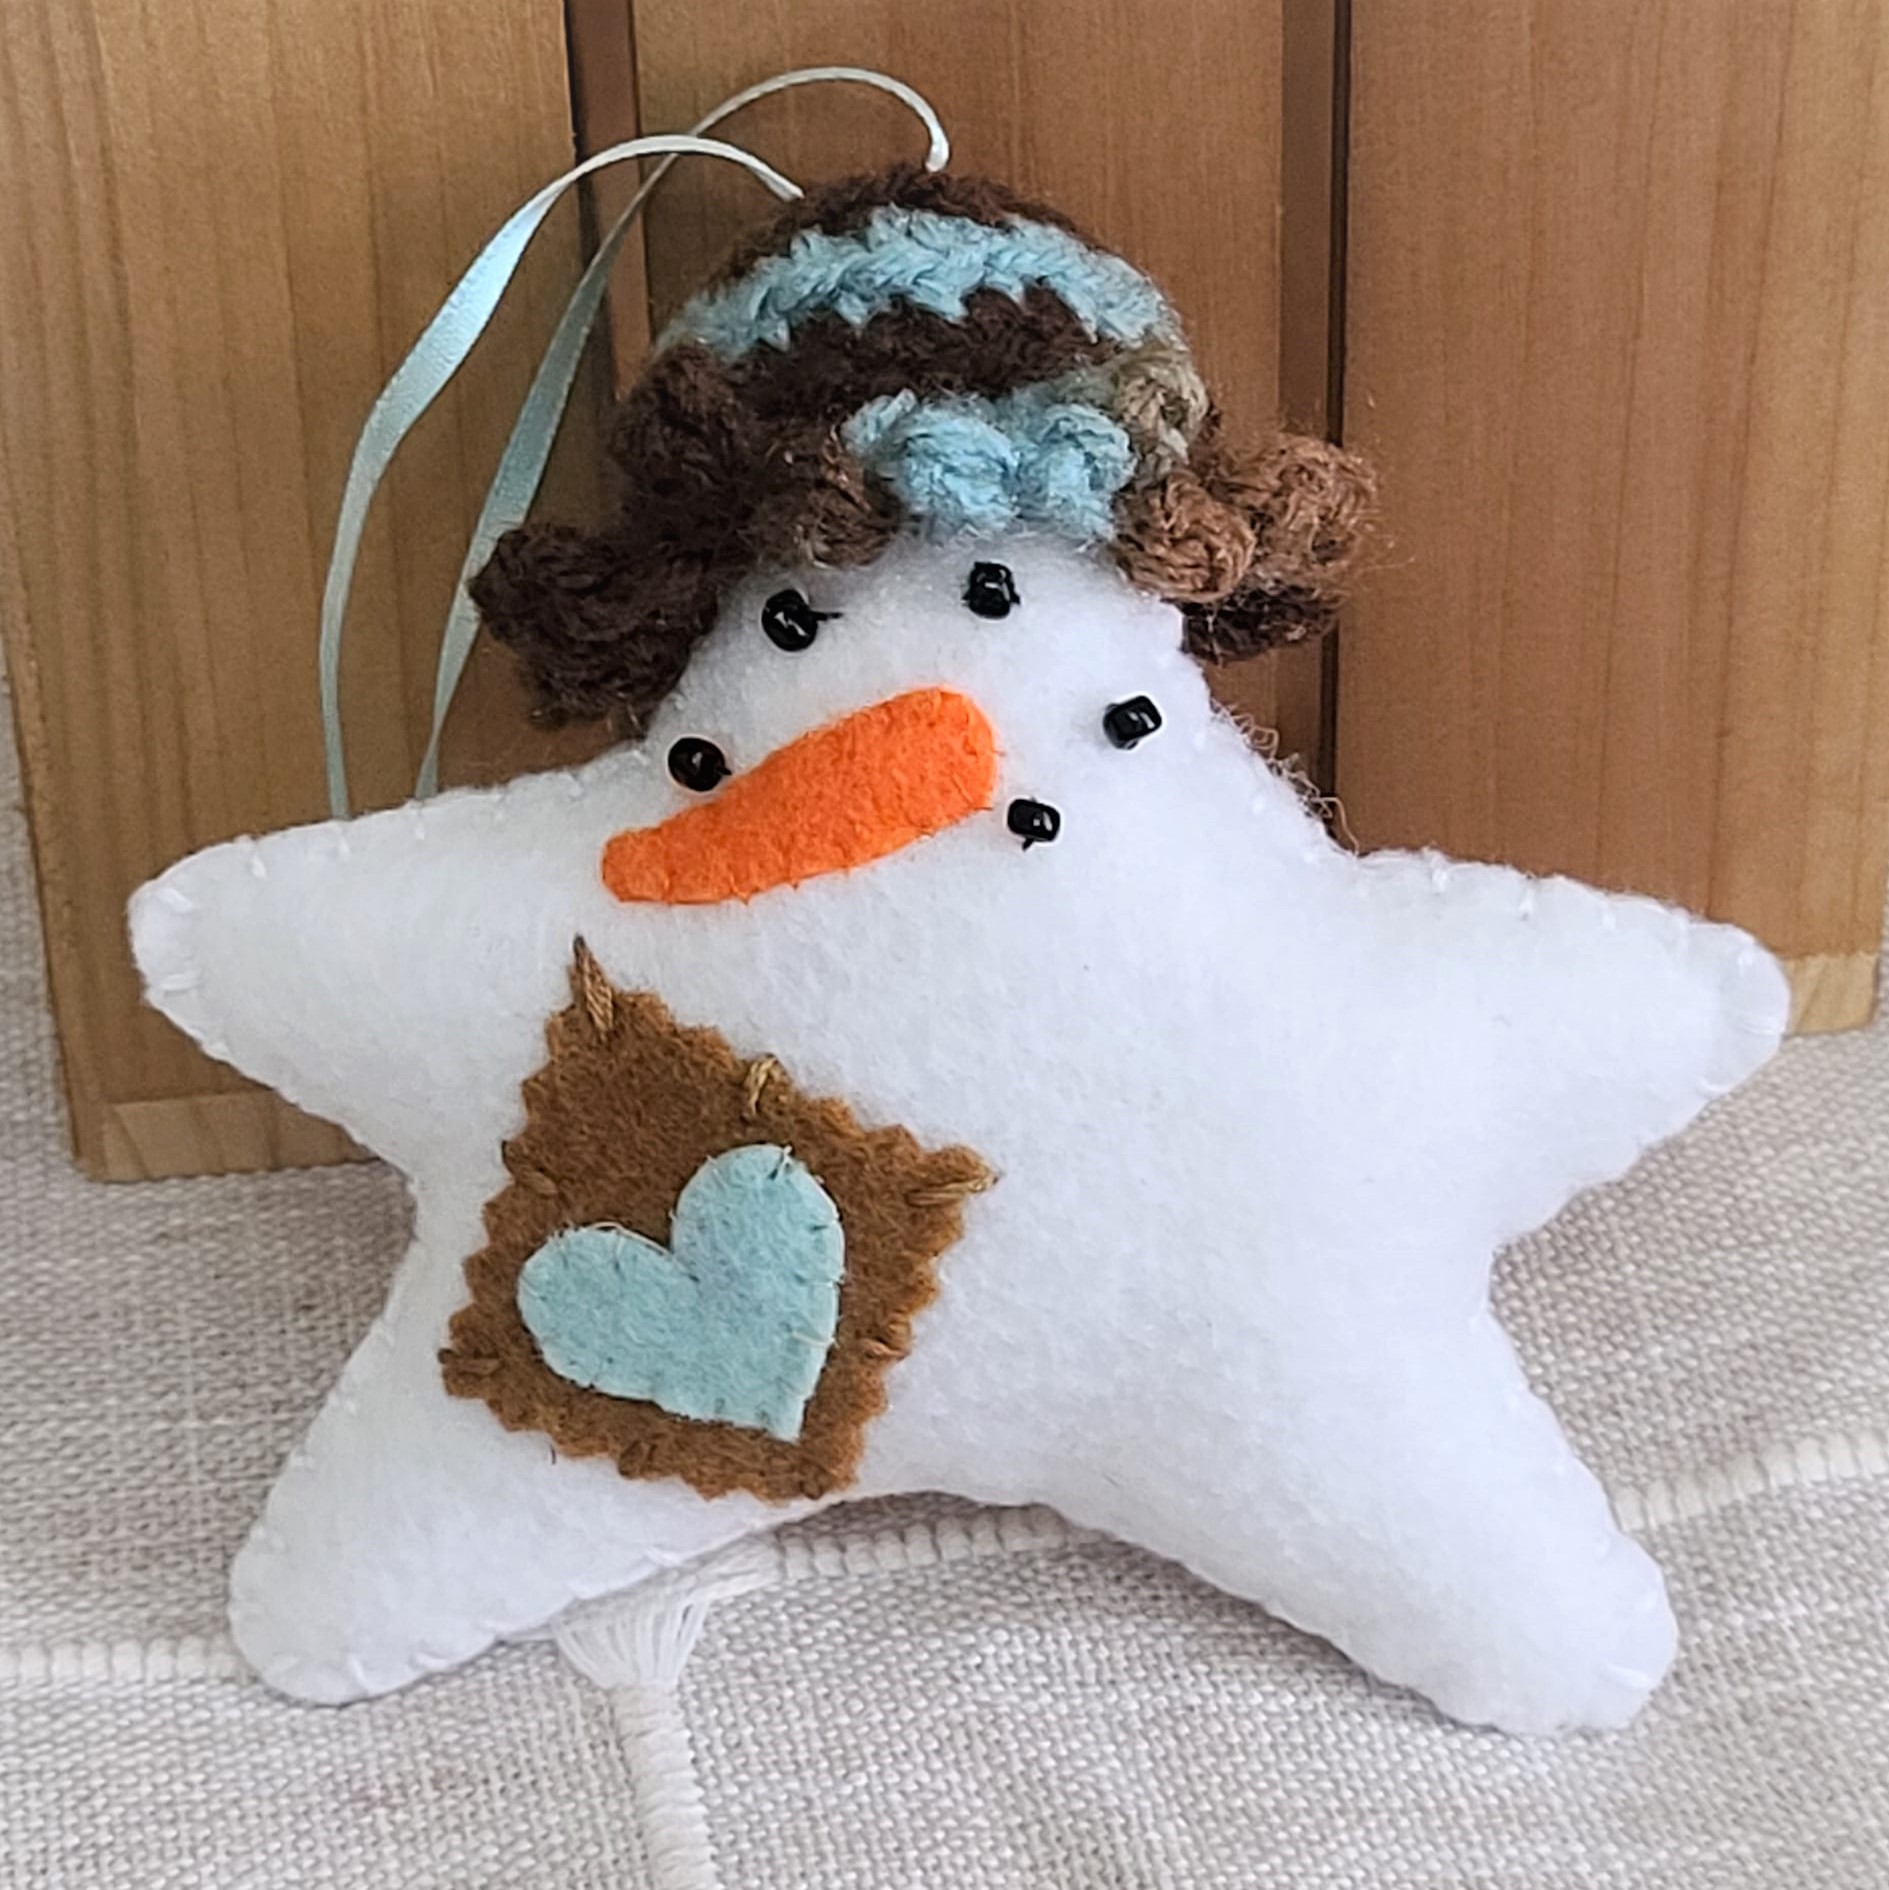 Felt Snowman star ornament with crochet hat - brown/blue hat